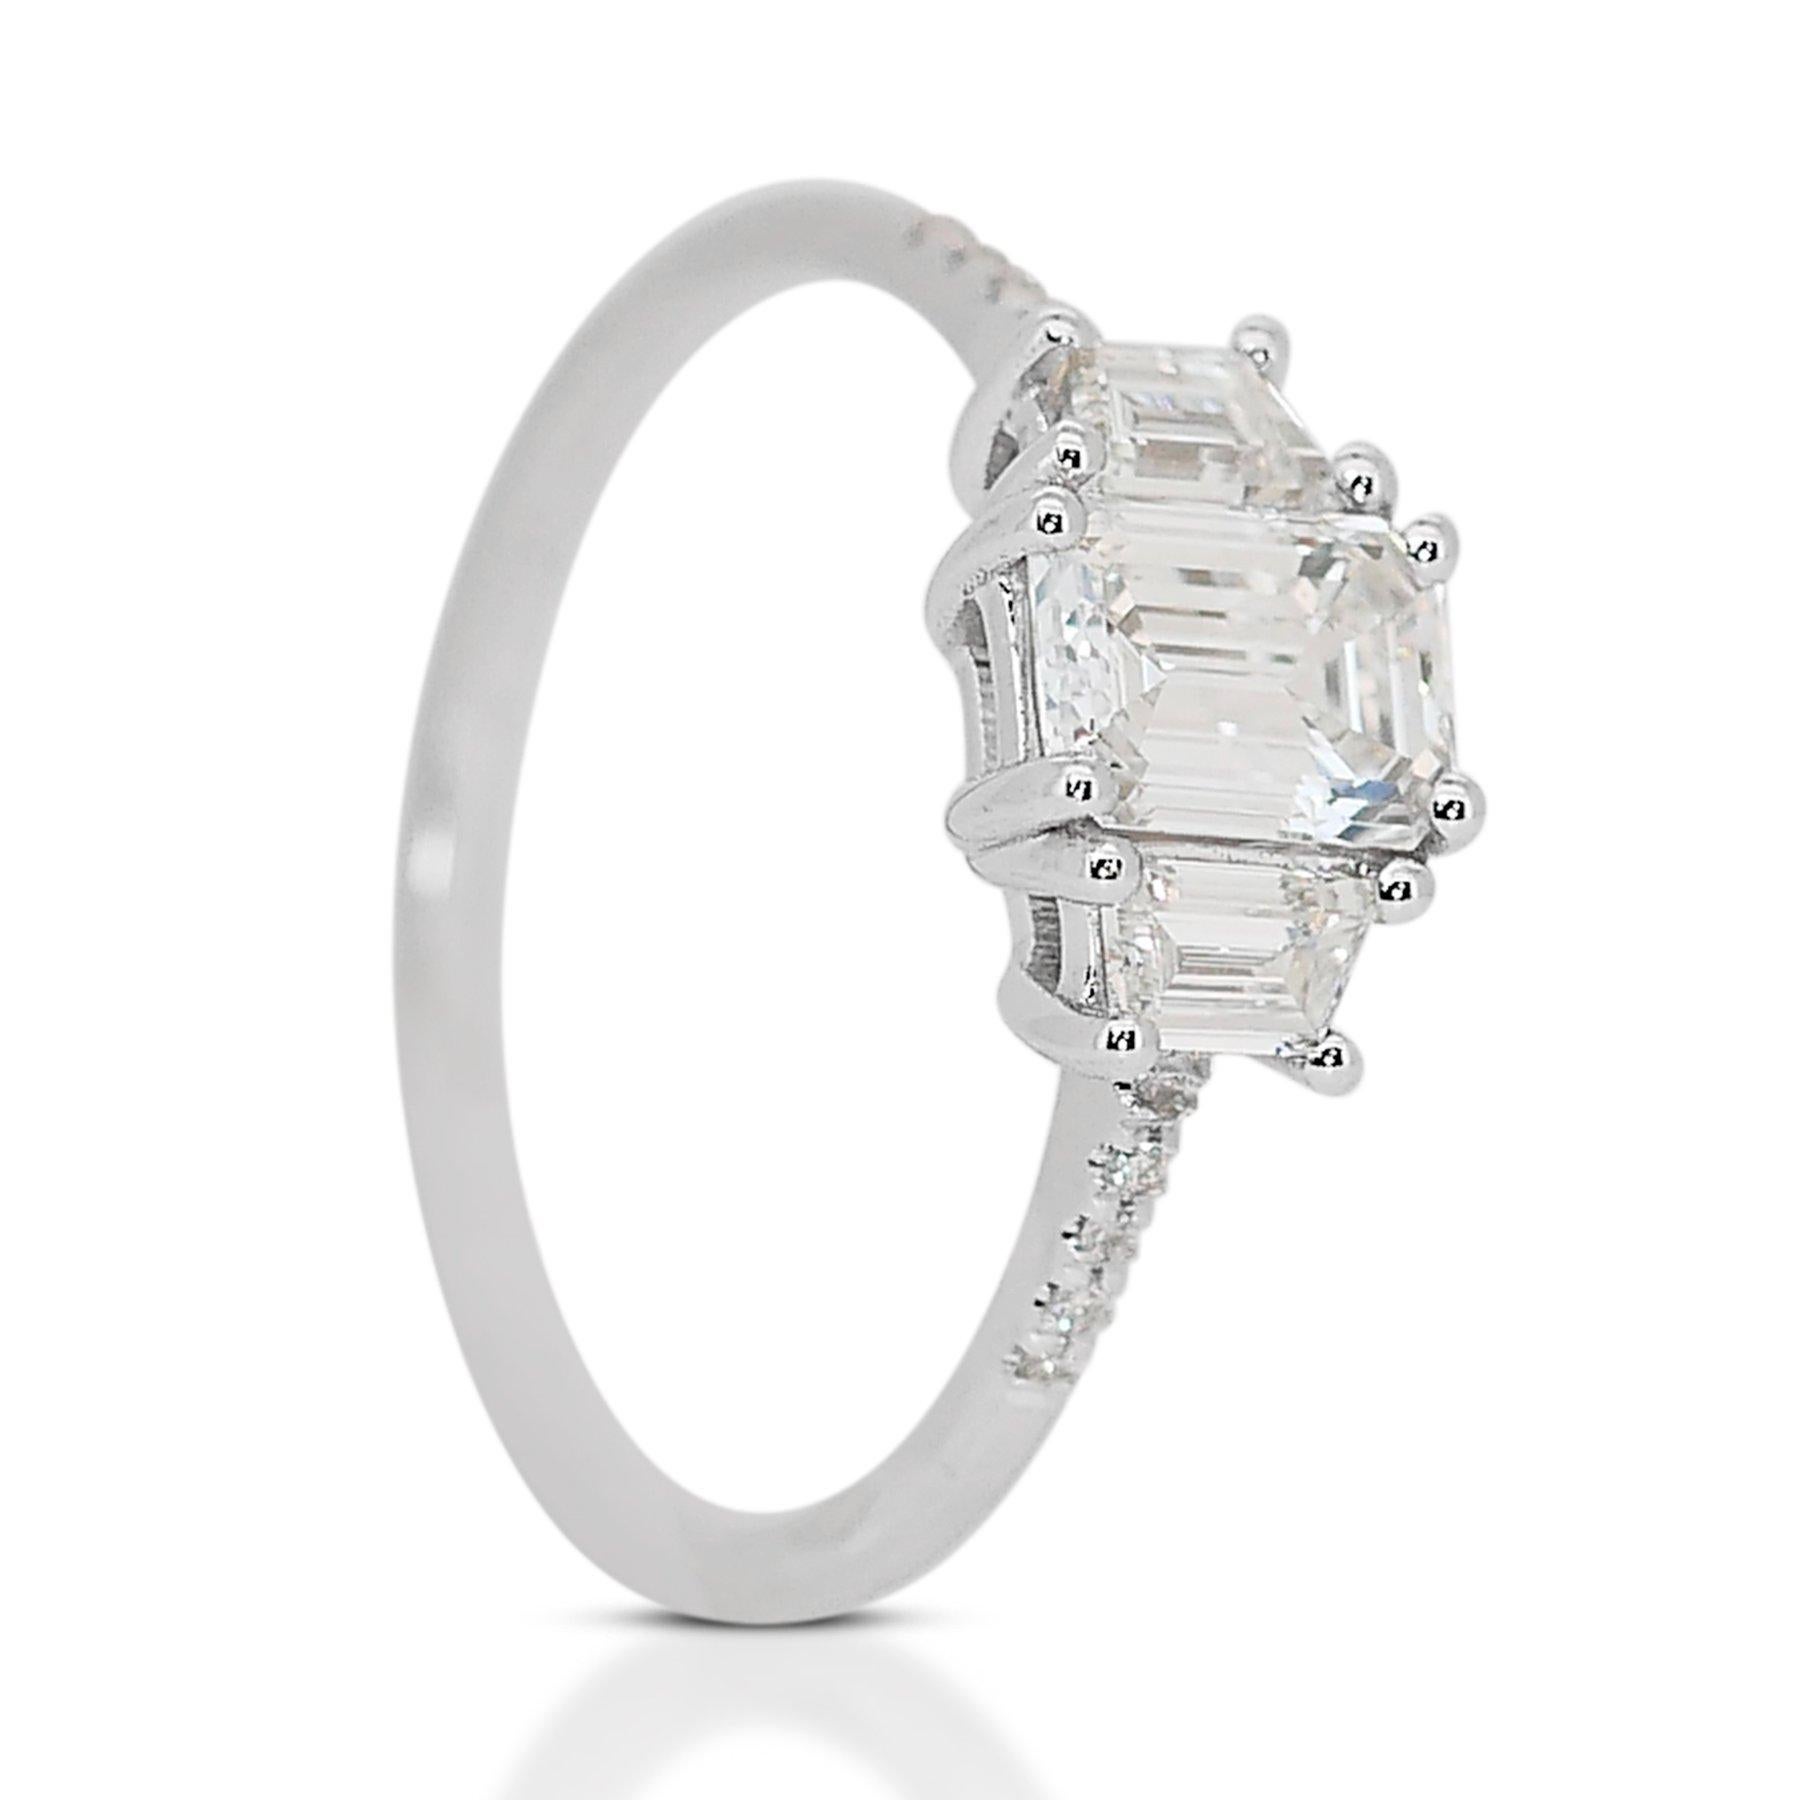 Emerald Cut Elegant 1.11ct Diamond 3-Stone Ring in 18k White Gold - IGI Certified For Sale